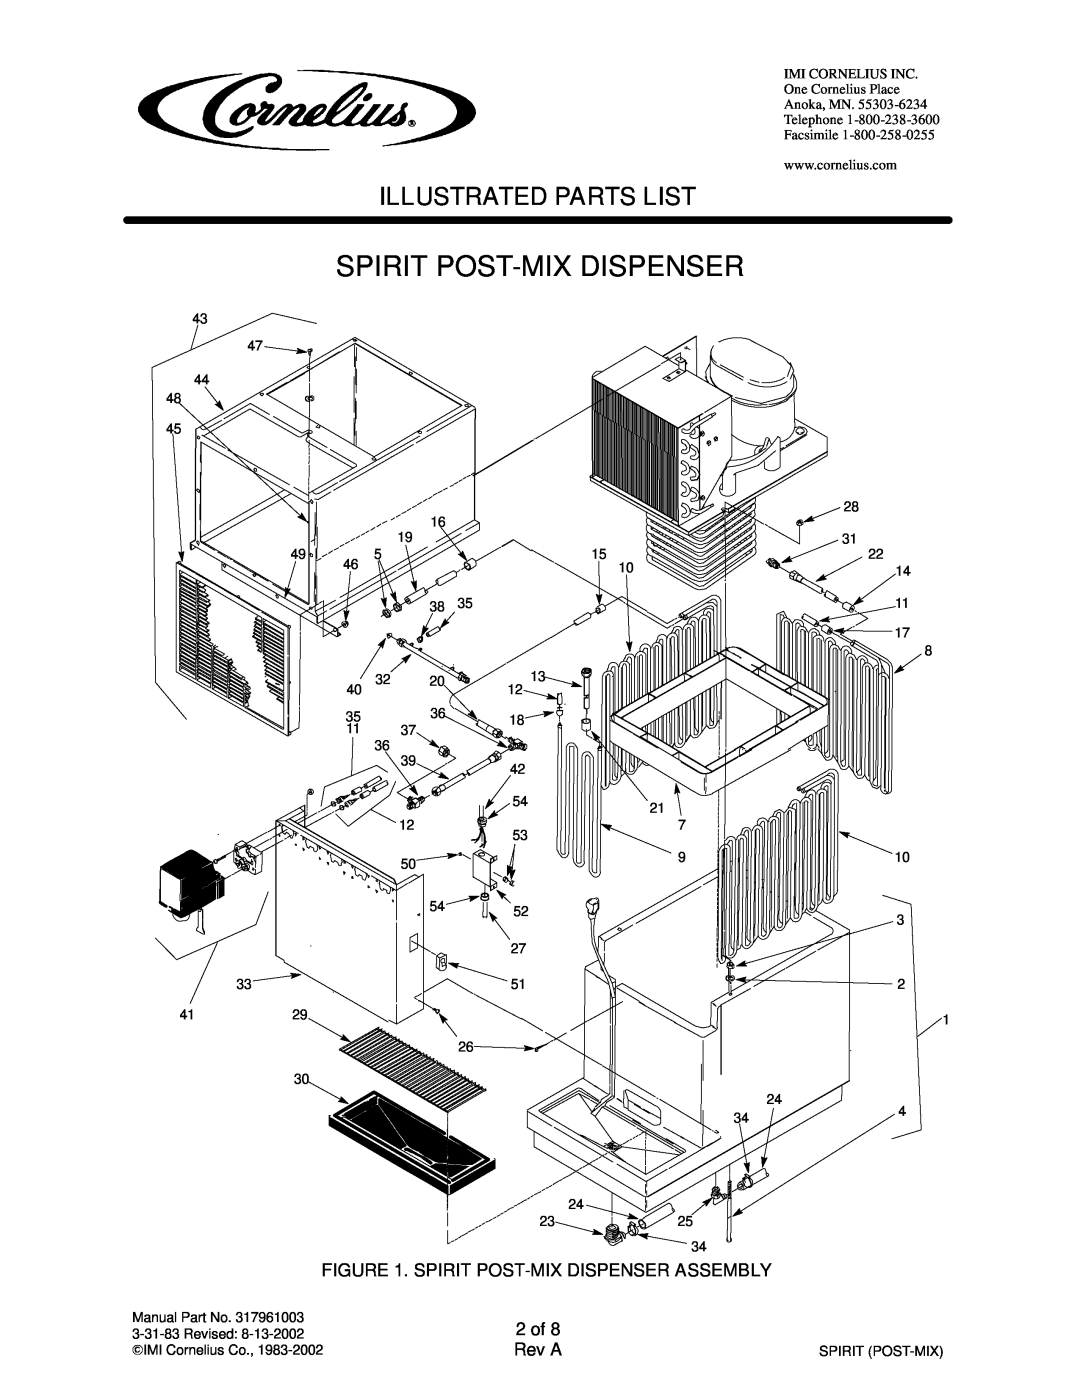 Cornelius 414384-XXX, 414385-XXX manual Spirit Post-Mix Dispenser Assembly, 2 of, Illustrated Parts List, Rev A 